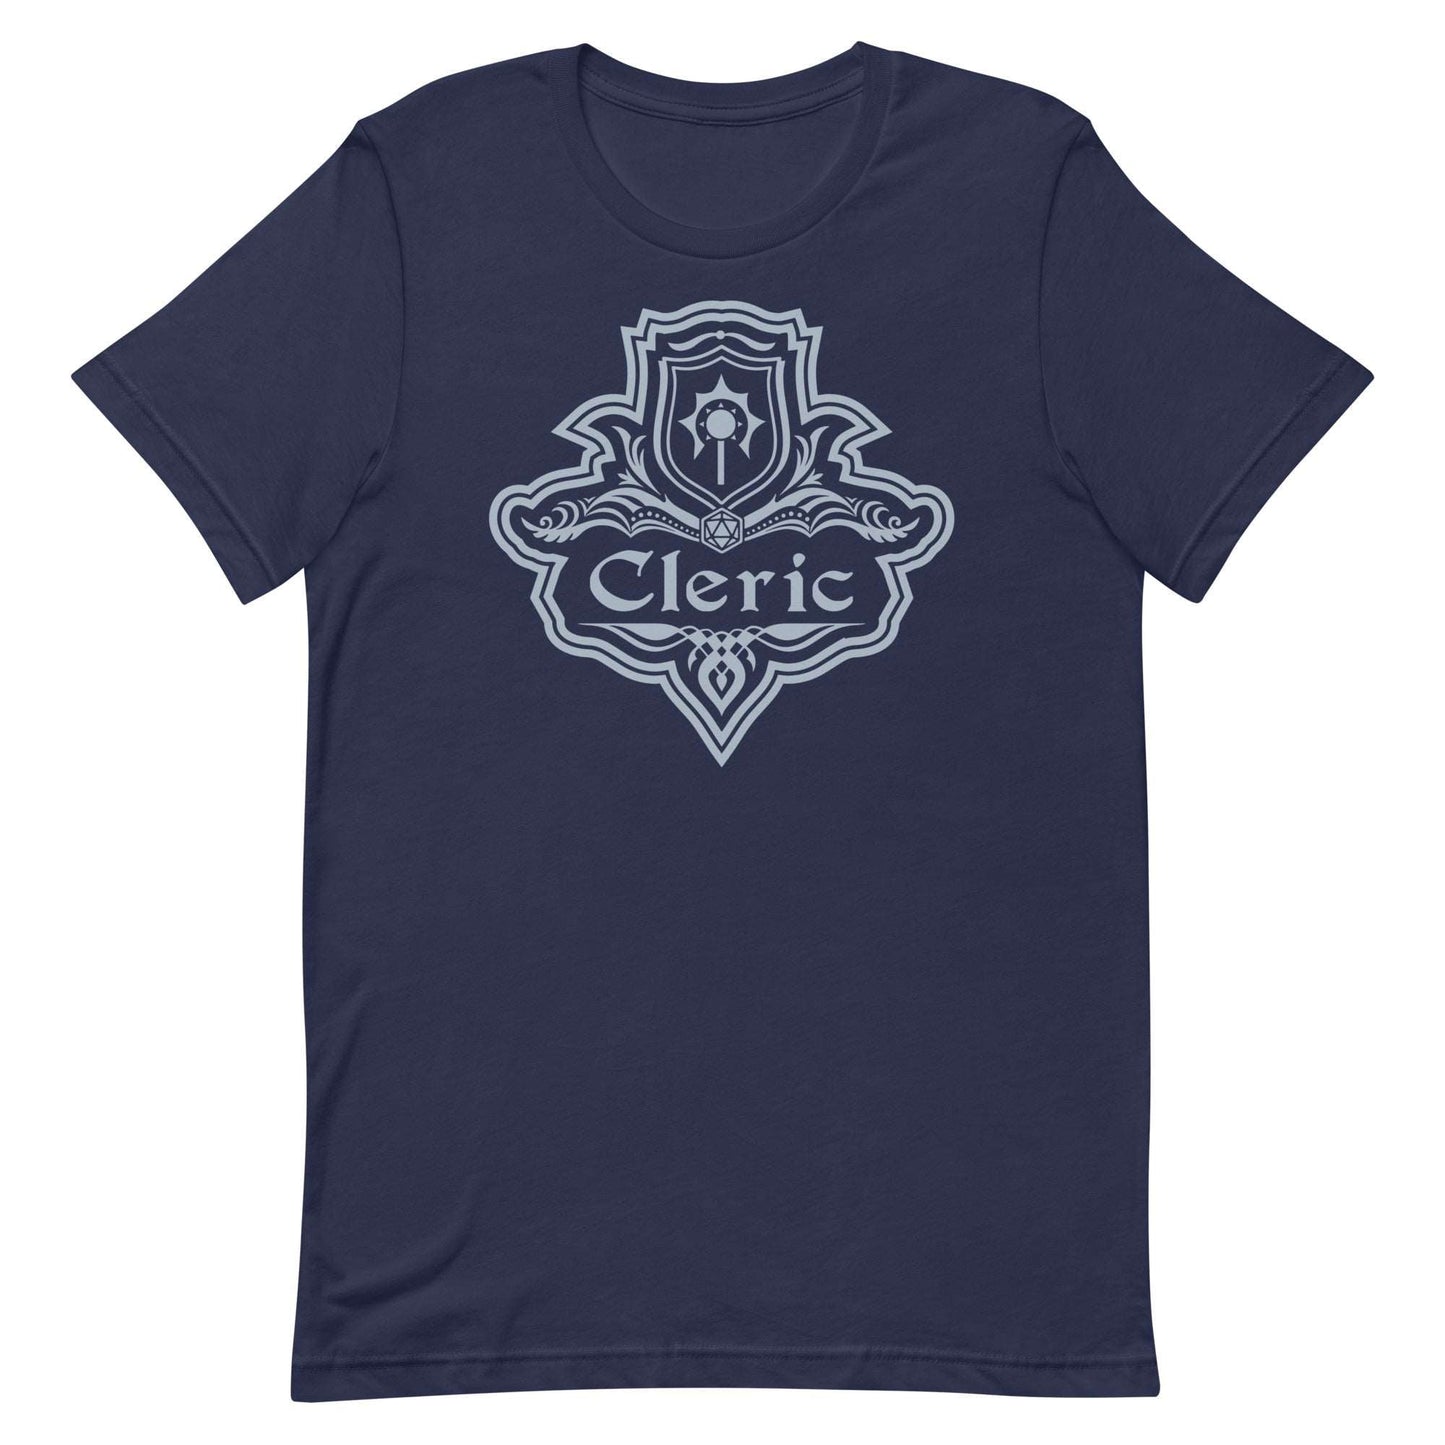 DnD Cleric Class Emblem T-Shirt - Dungeons & Dragons Cleric Tee T-Shirt Navy / S